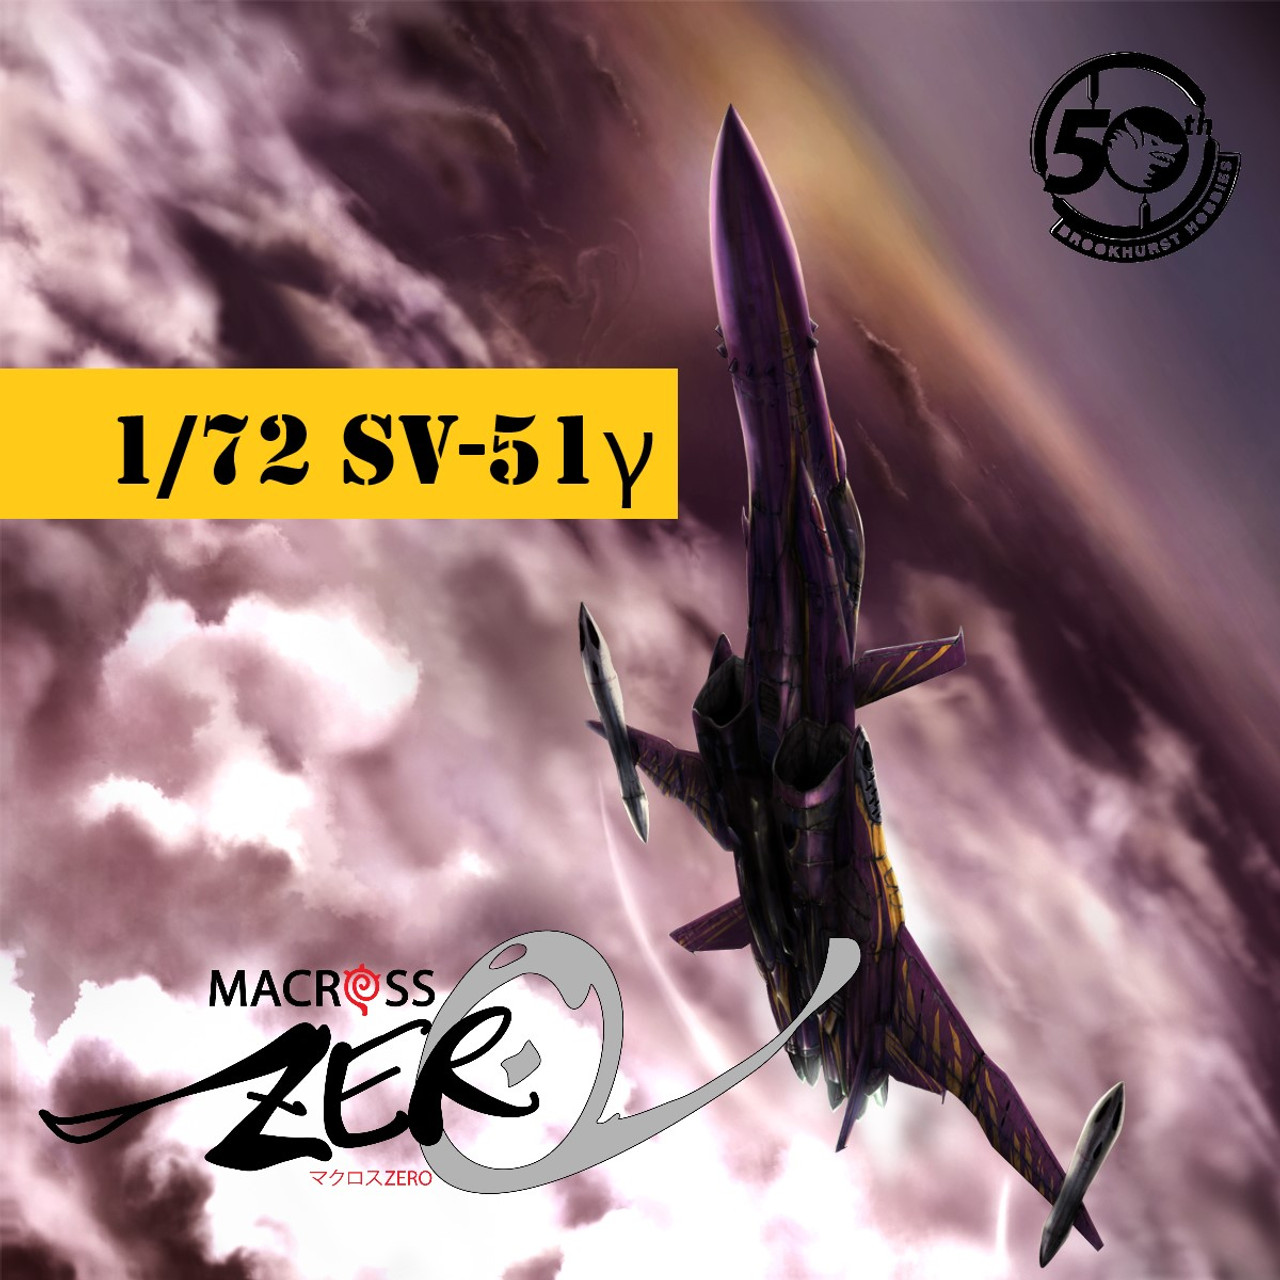 1/72 SV-51 γ Gamma Nora - Macross Zero